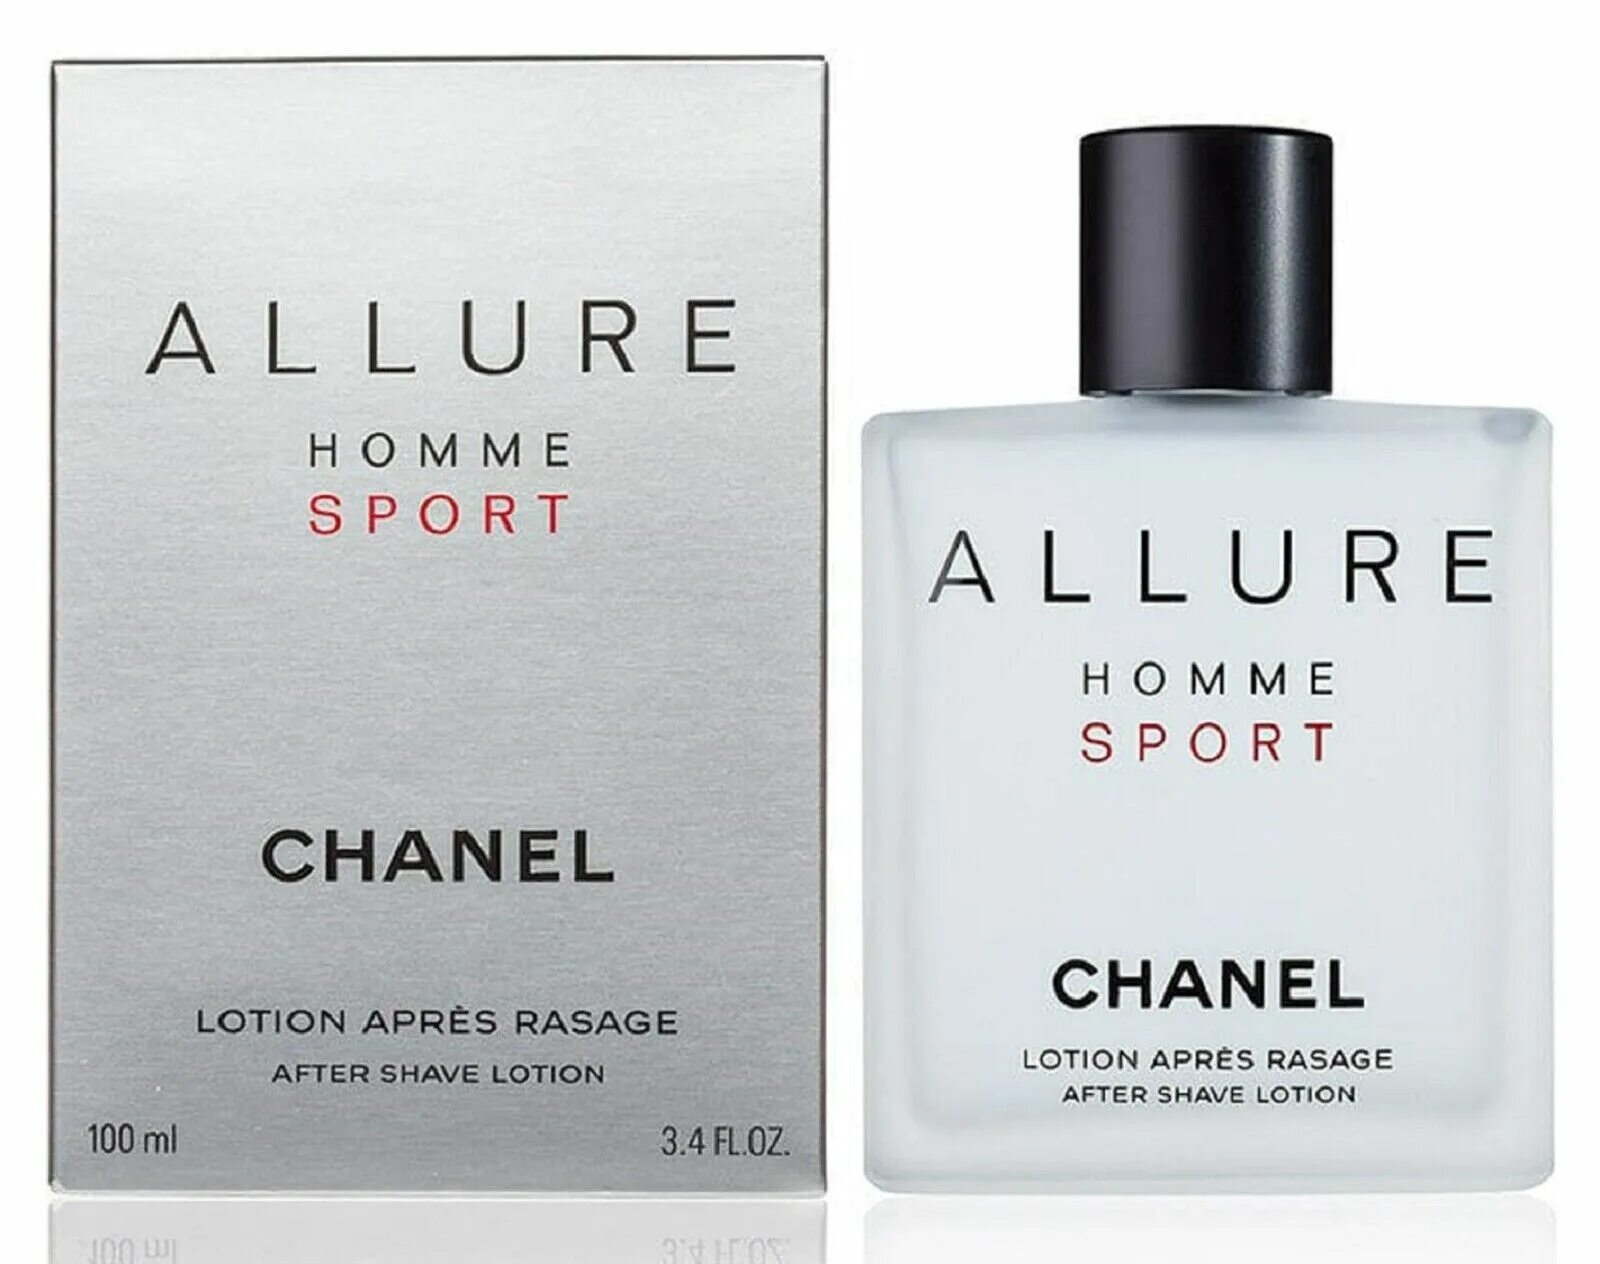 Allure homme sport оригинал. Chanel Allure homme Sport. Шанель Allure homme Sport. Chanel Allure Sport. Chanel Allure homme Sport 100 мл.